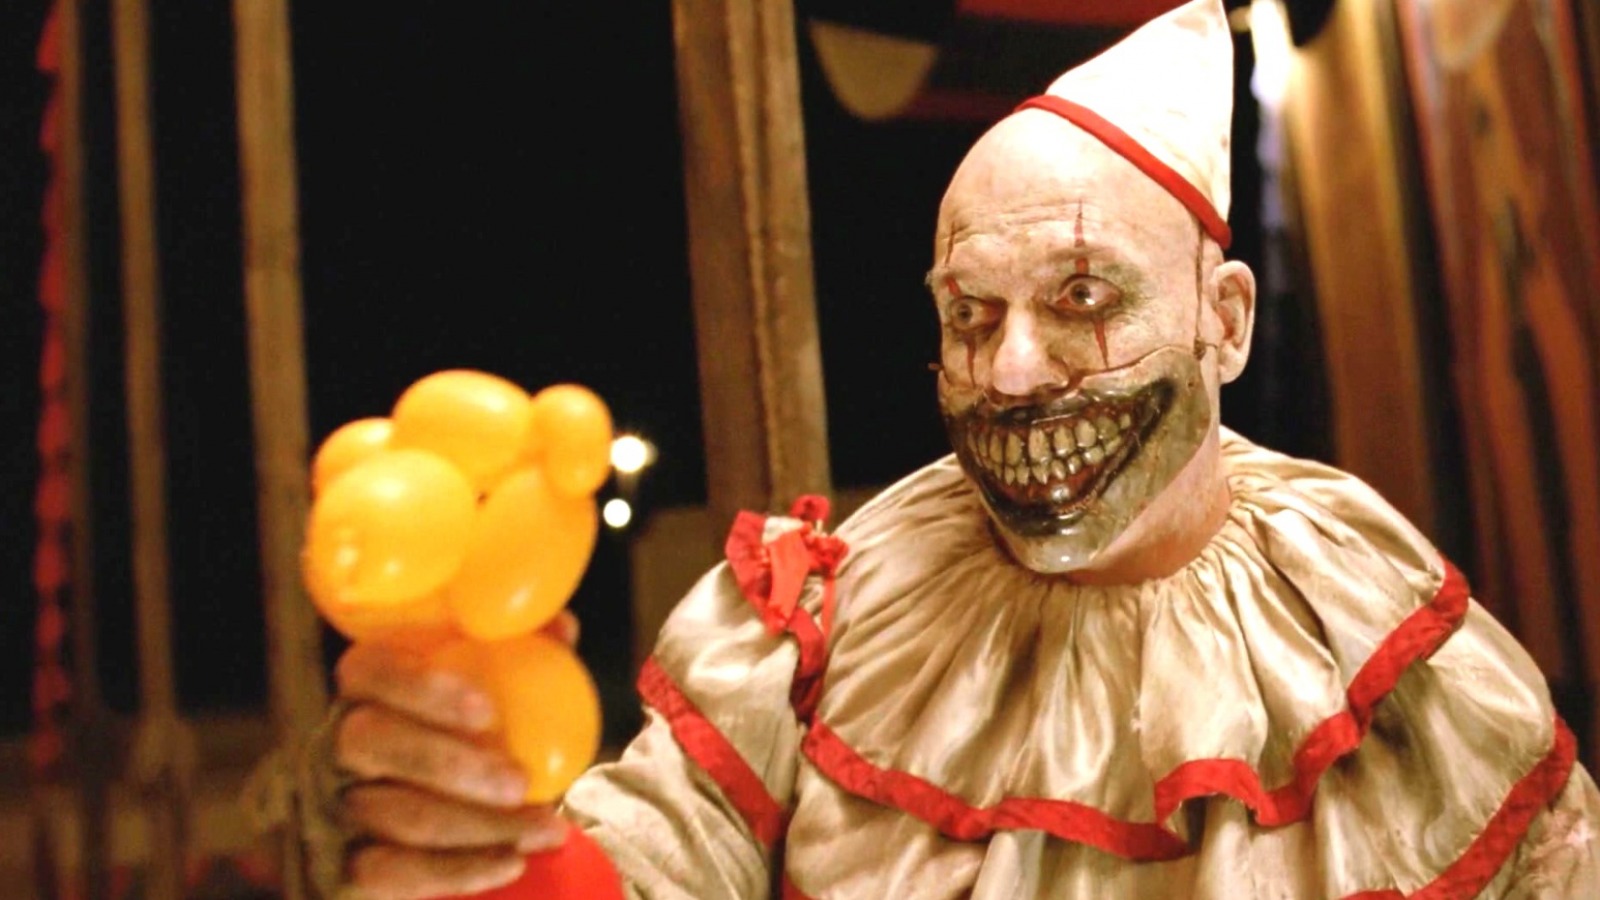 Complete Twisty Clown Freak Show American Horror Story Halloween Costume Mask